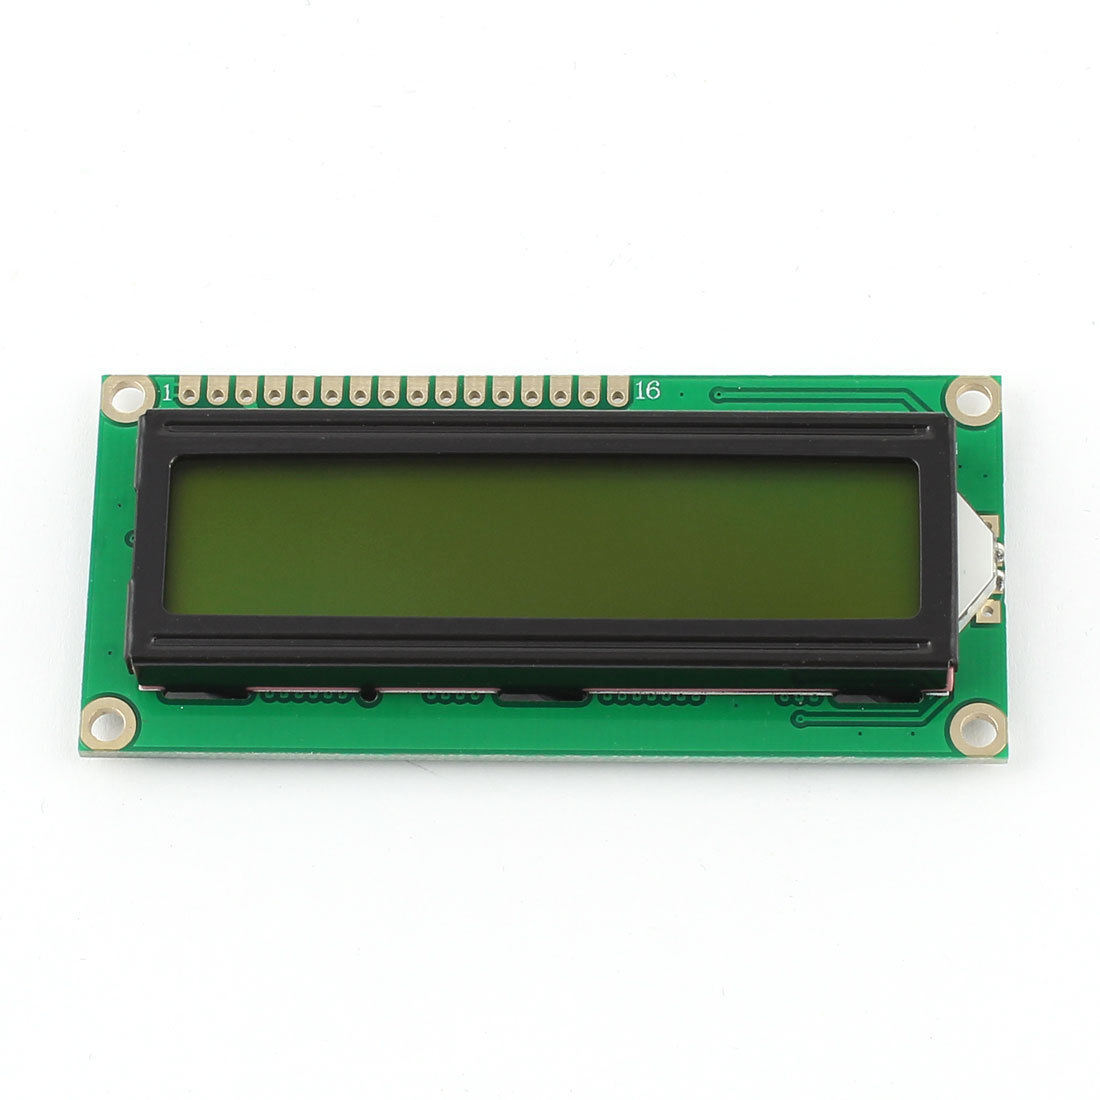 00_LCD-Display-Module-HD44780-przod.jpg